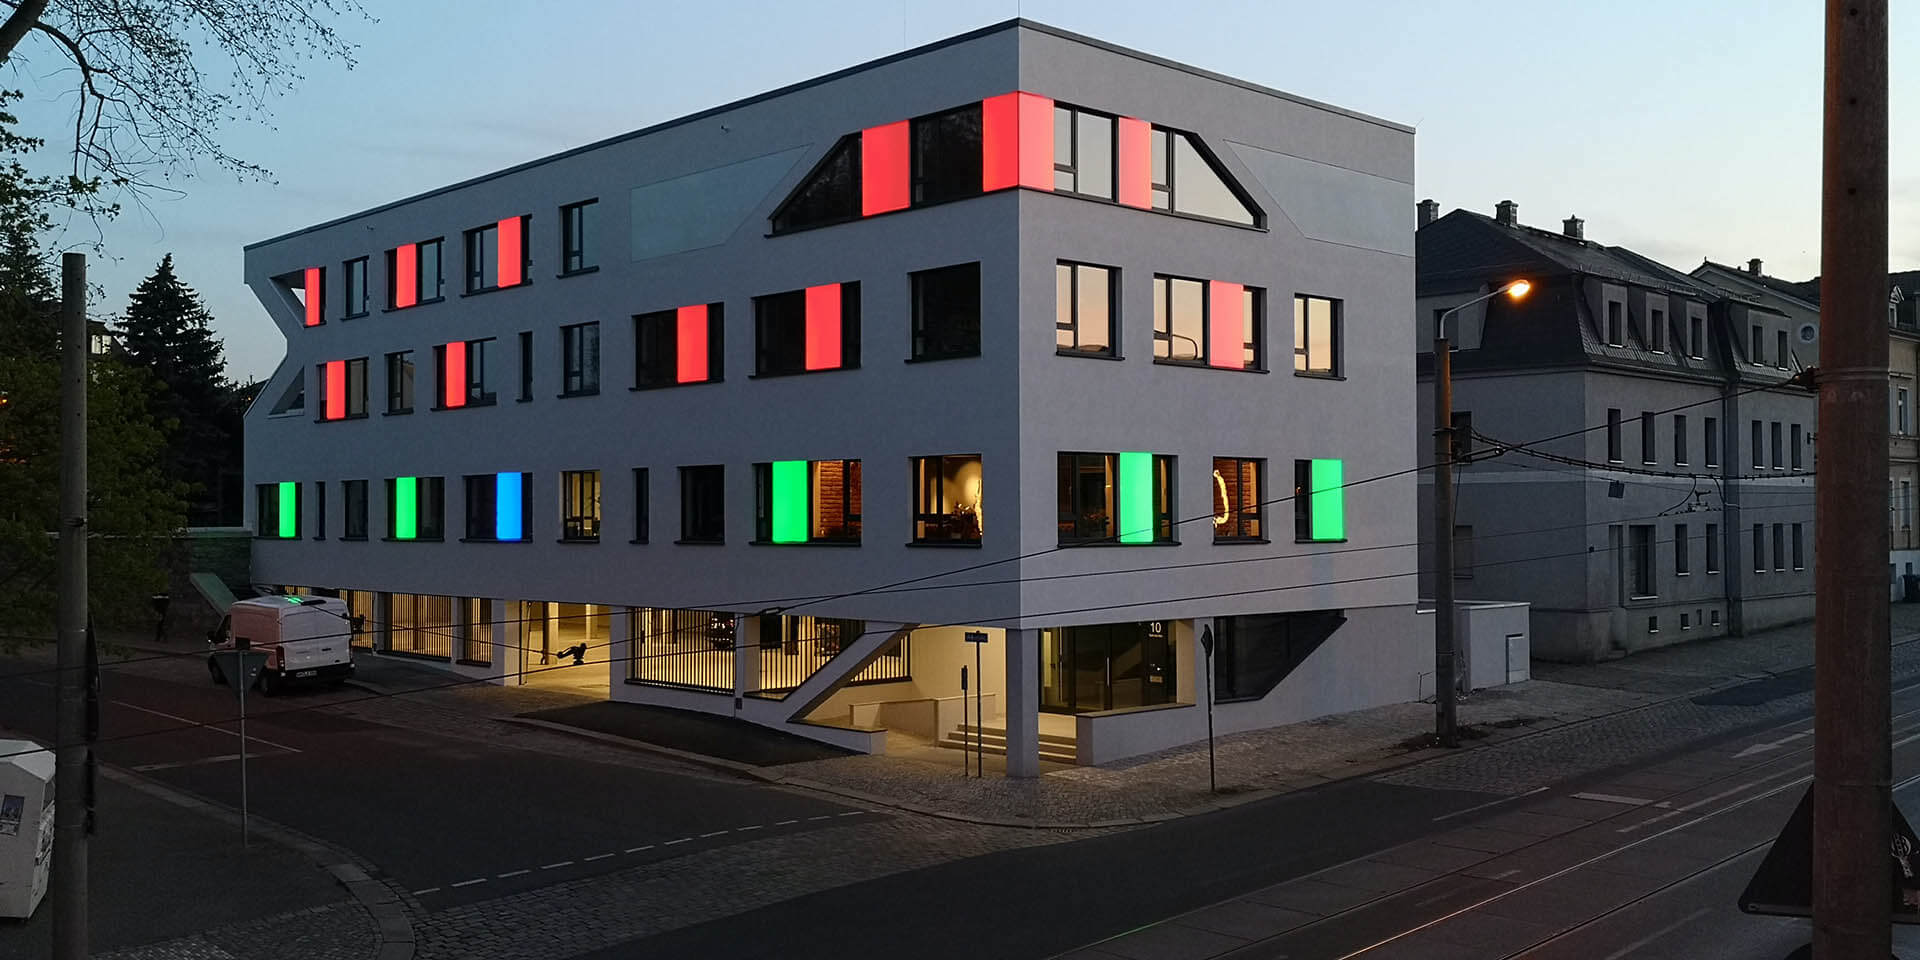 Partielle LED Fassadenbeleuchtung in verschiedenen Farben (rot, grün, blau); led facade lighting: red, green and blue coloured led-panels beside the windows (colour change)